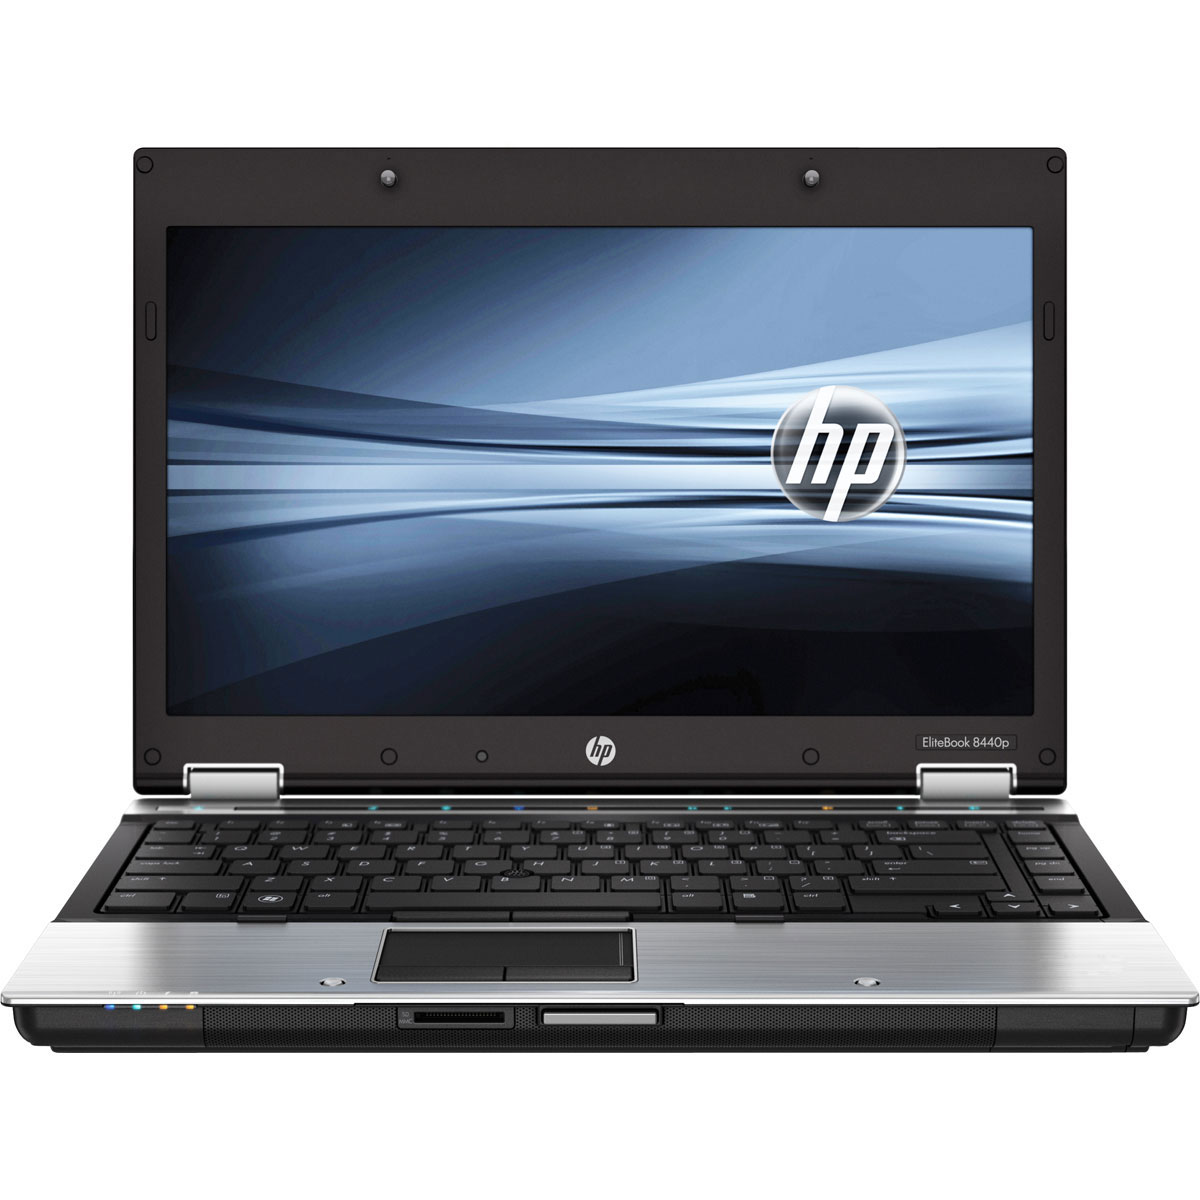 HP EliteBook 8440p, Windows 7 Home Laptop